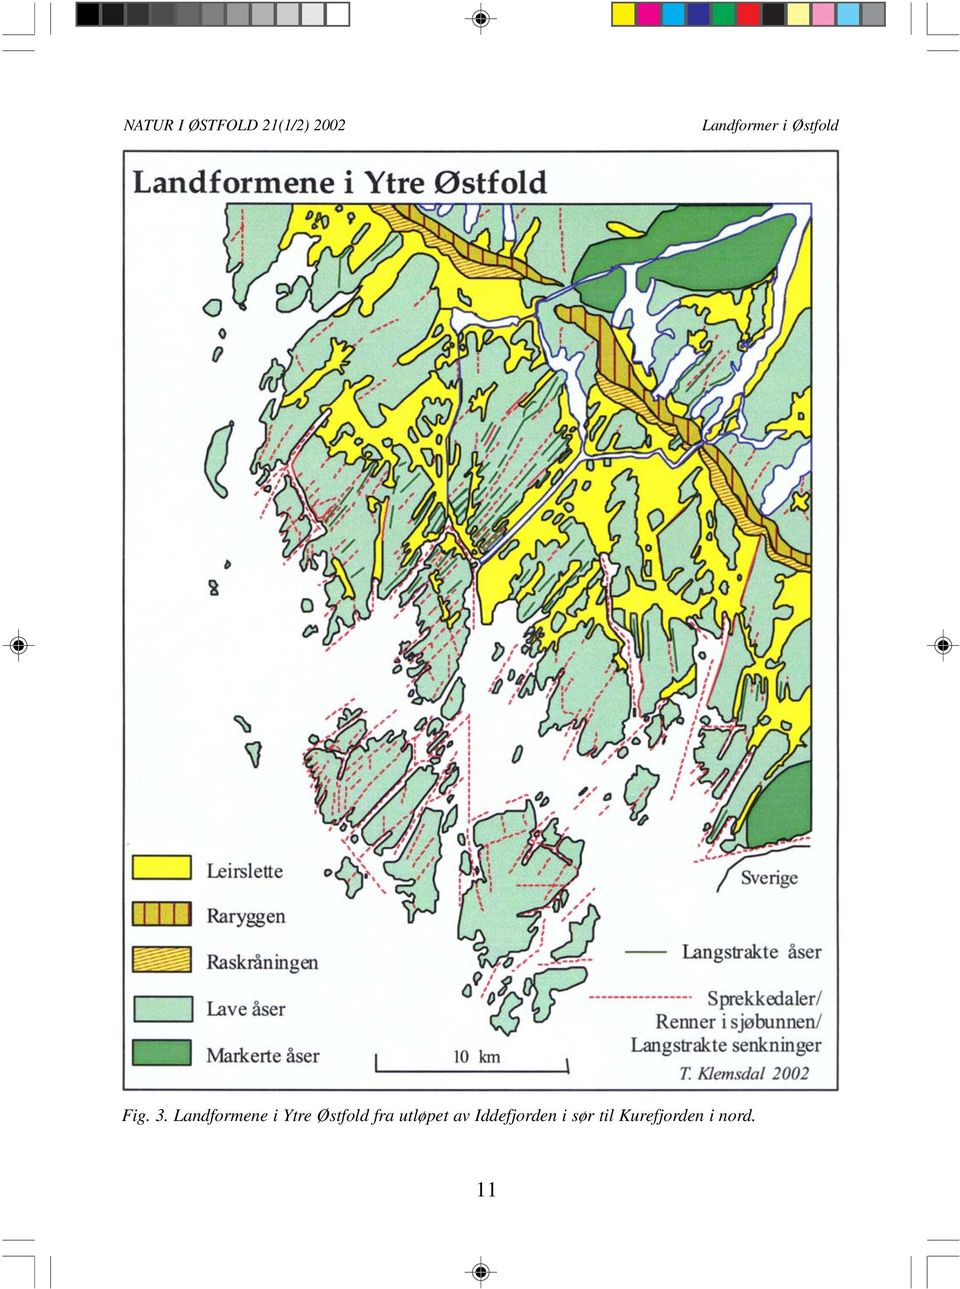 Landformene i Ytre Østfold fra